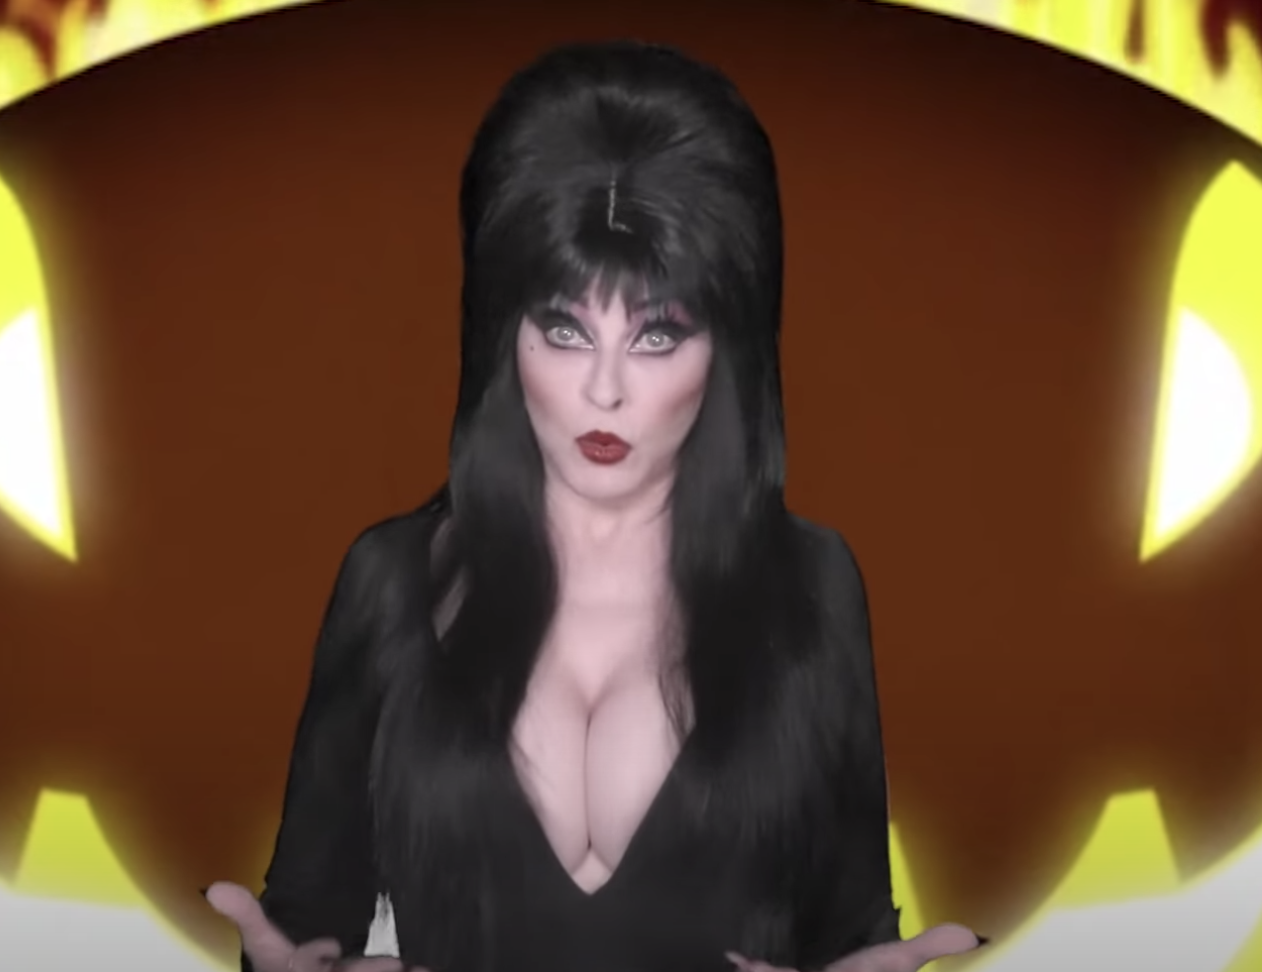 See 69-Year-Old Elvira, Mistress Of The Dark, In New Halloween Video